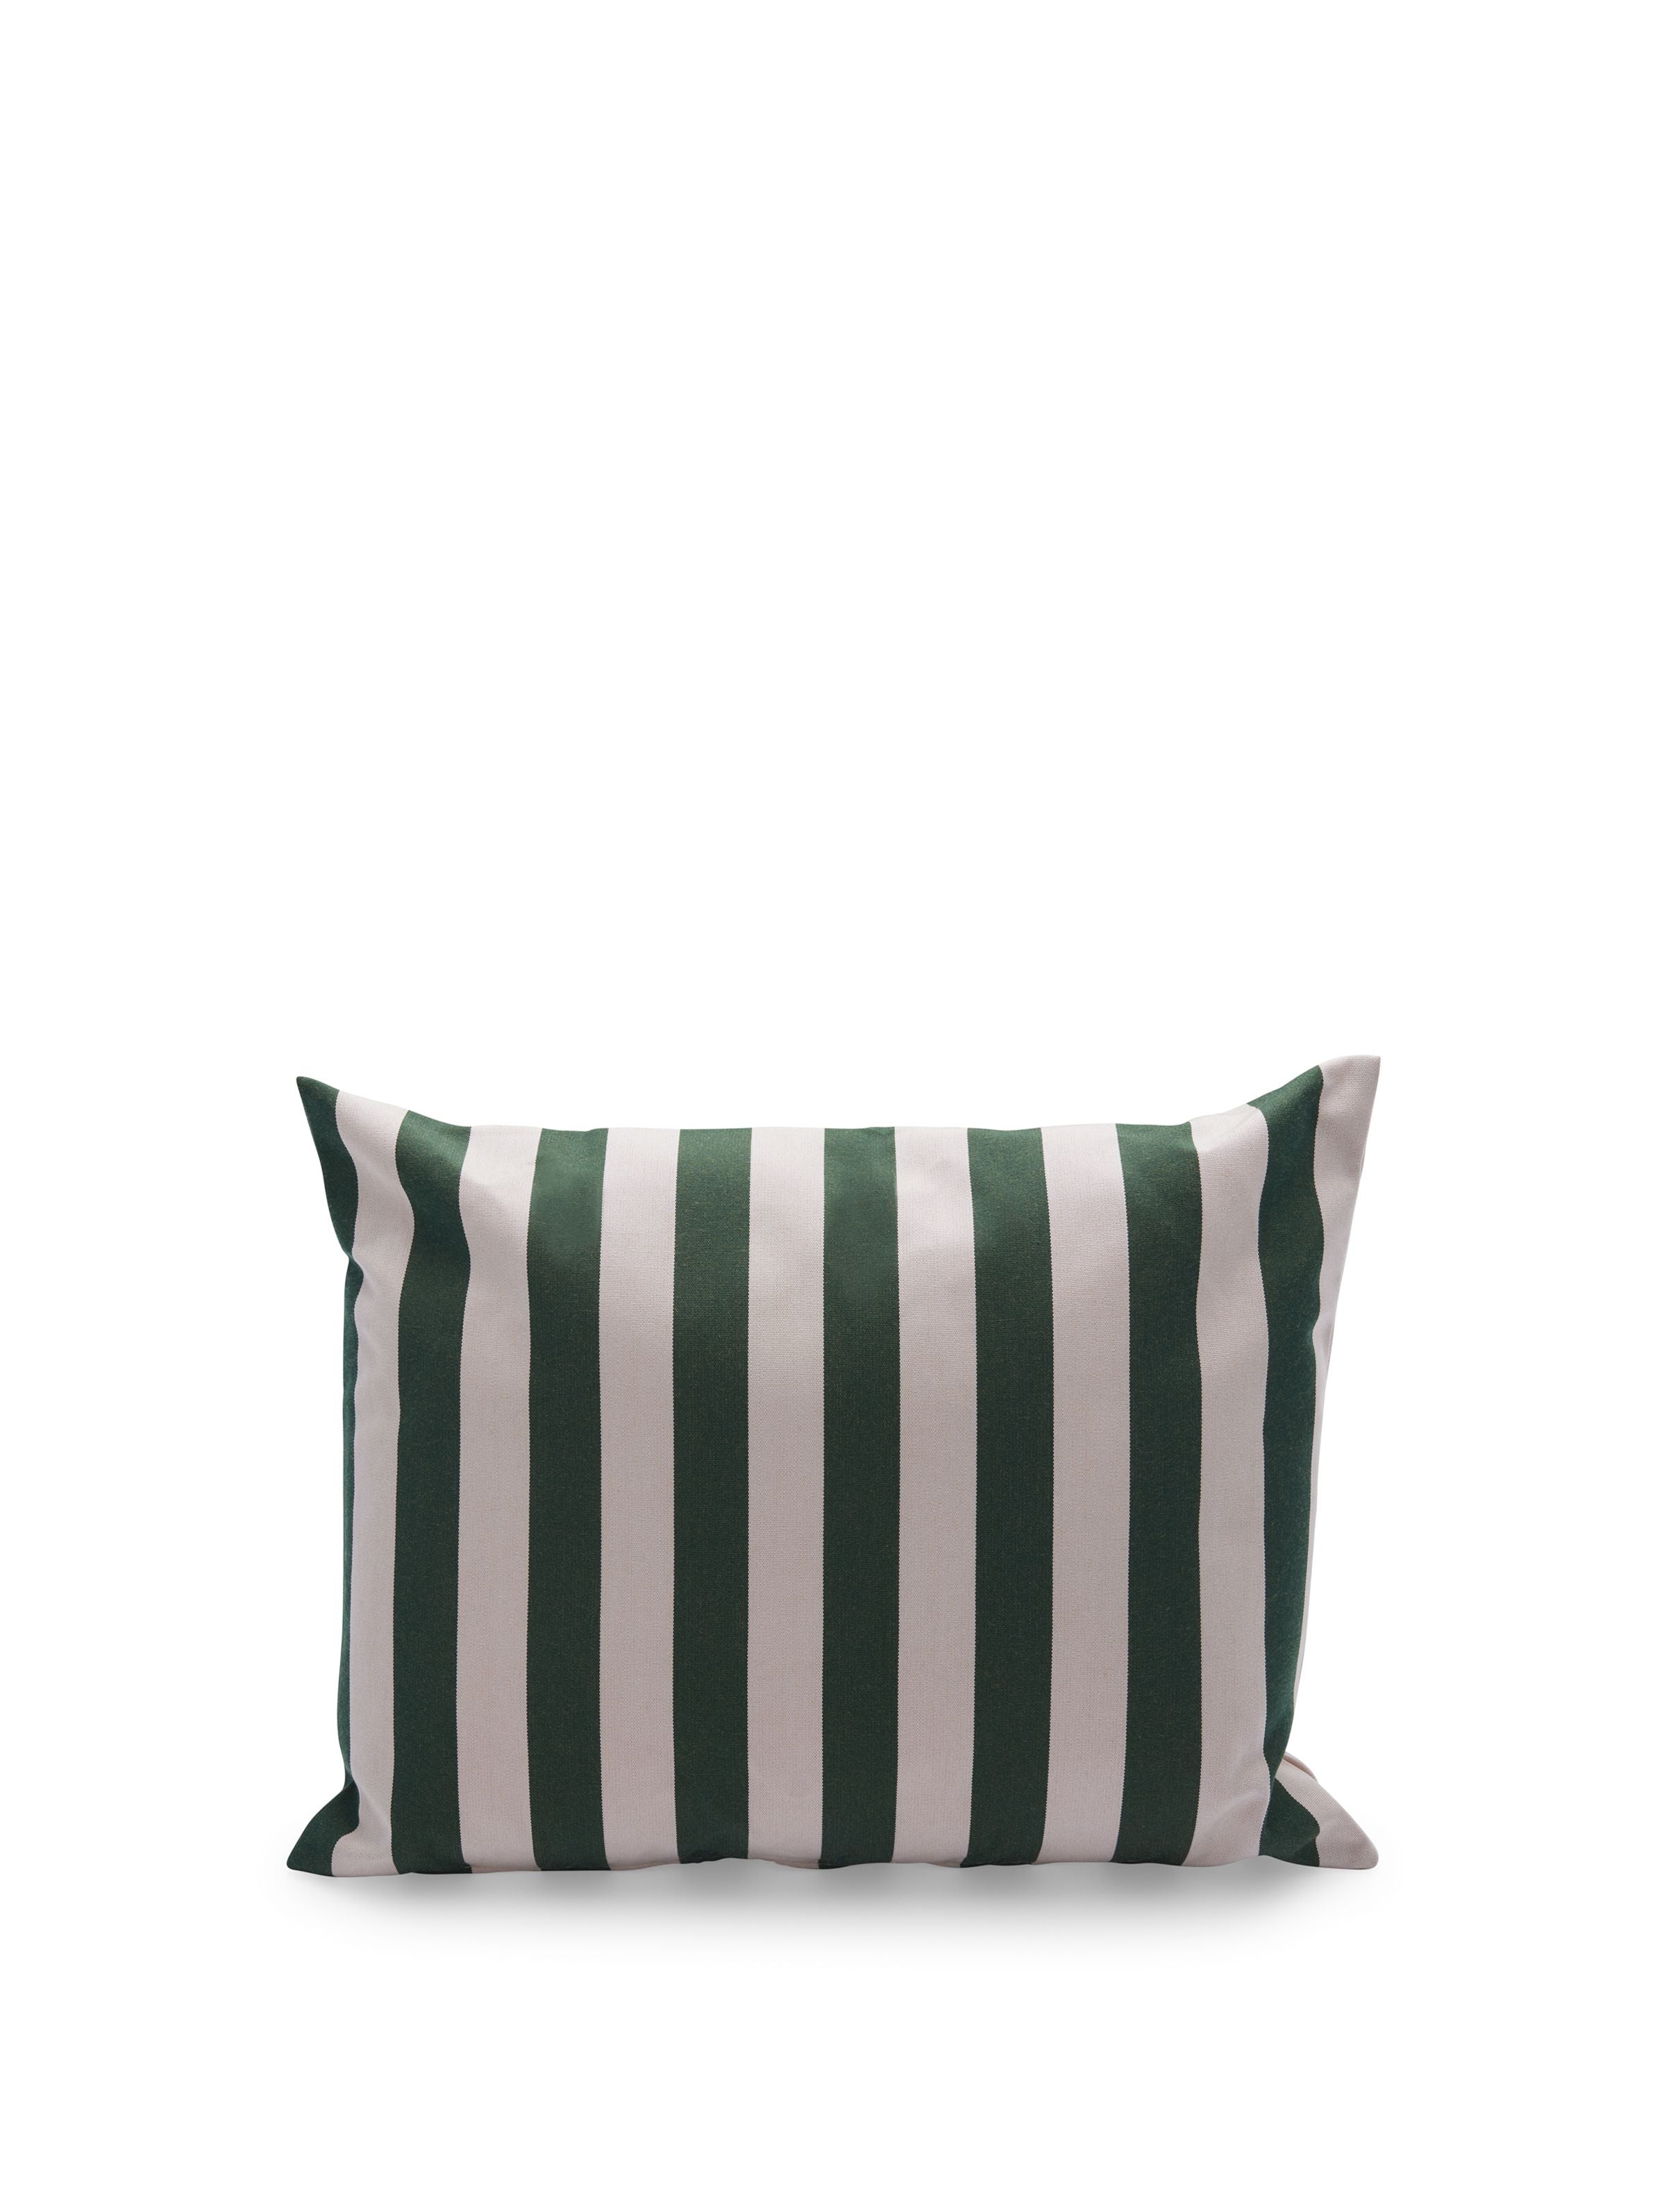 Skagerak Barriere Pillow 50x40 Cm, Light Apricot/Dark Green Stripe